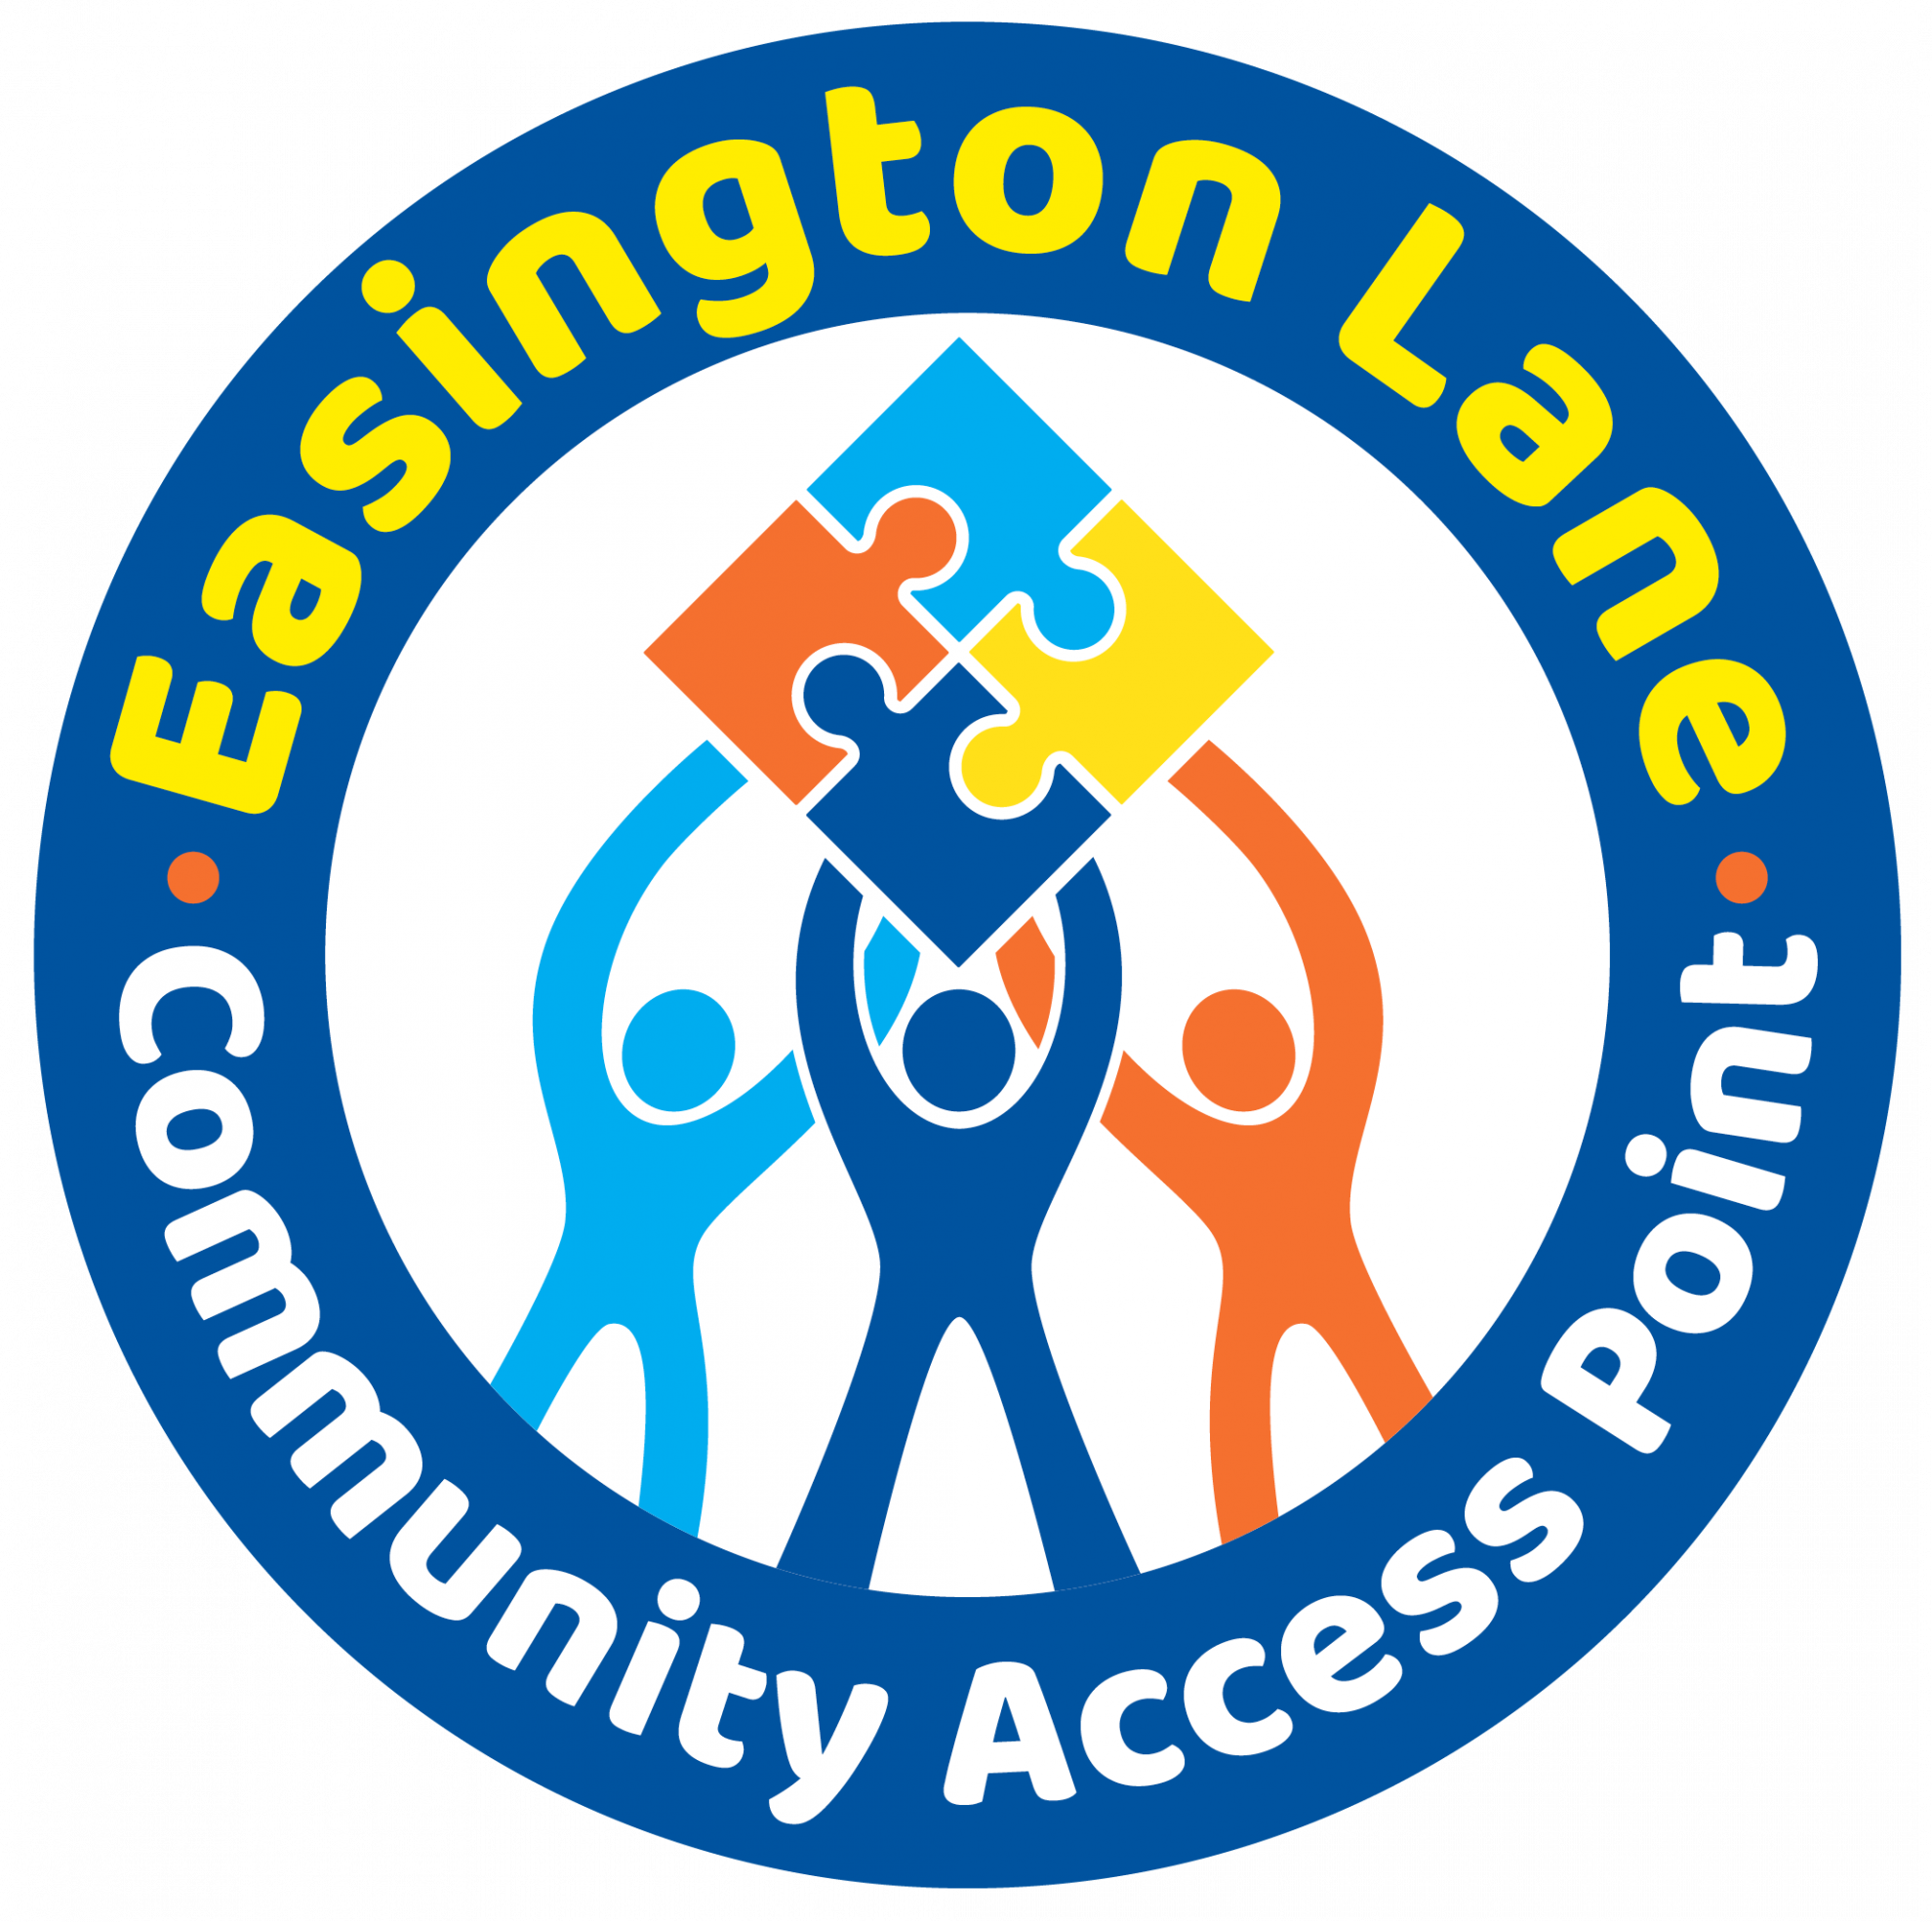 Easington Lane Community Access Point logo